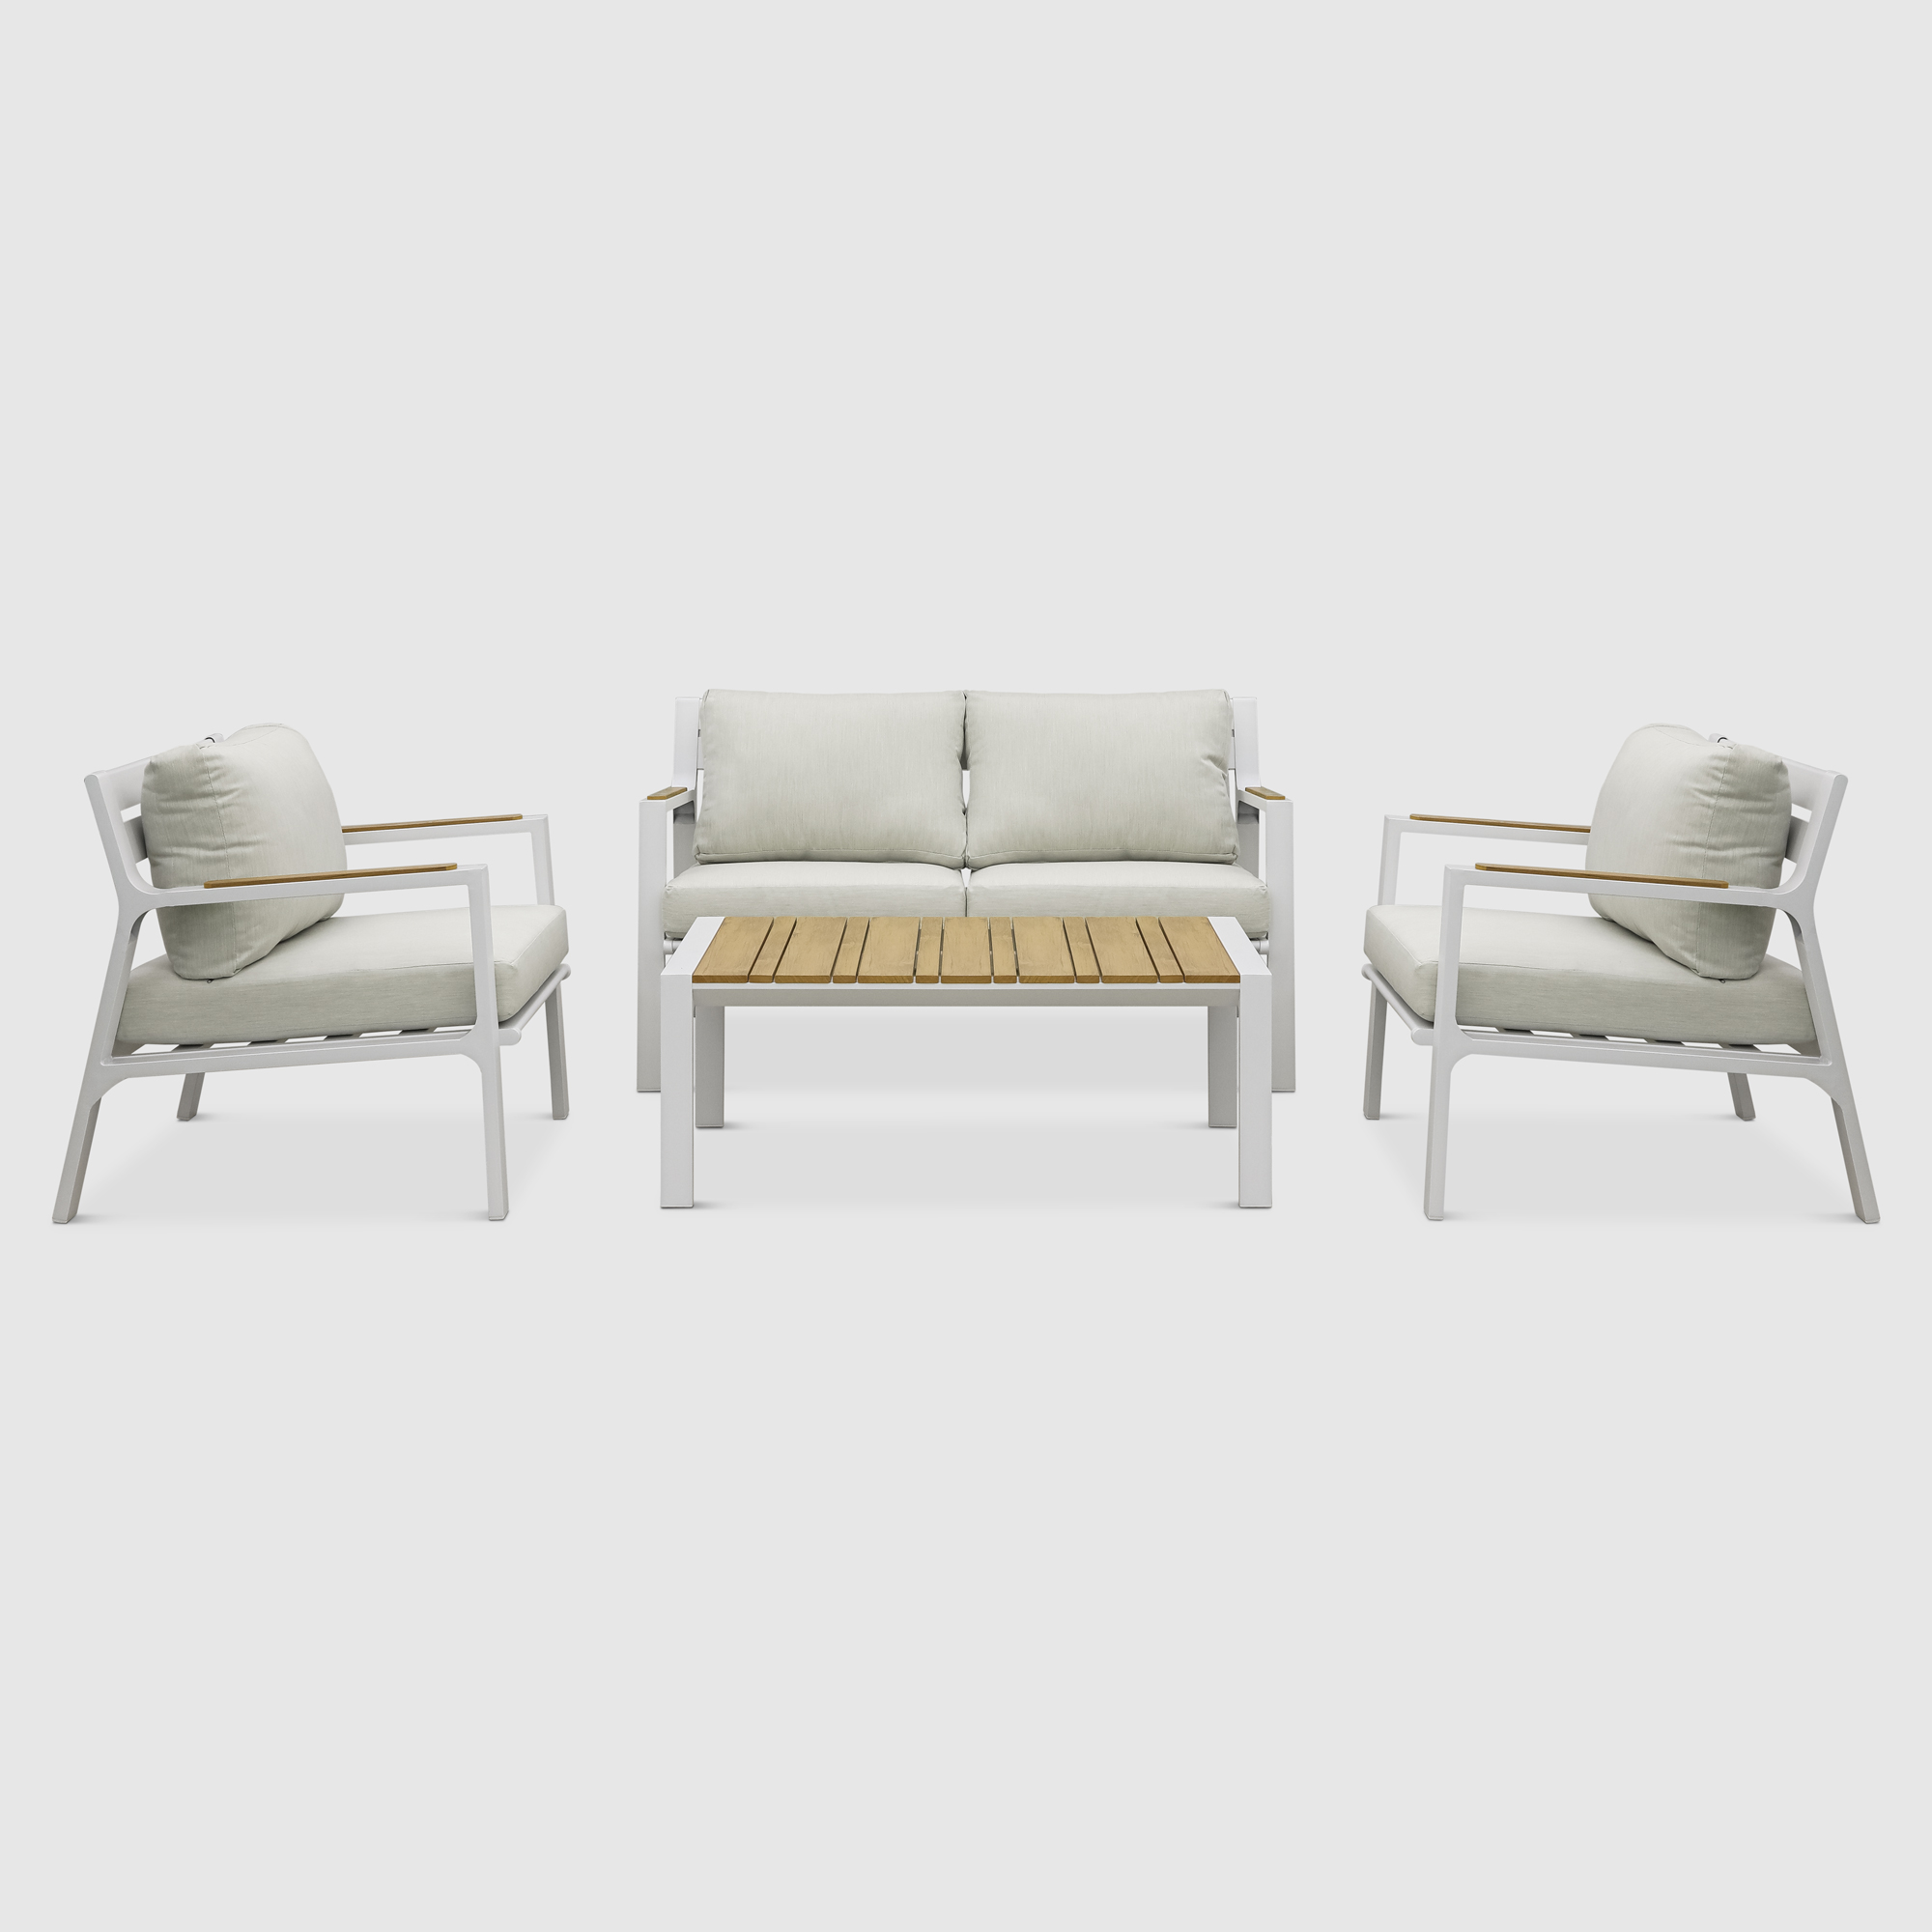 Комплект мебели Bizzotto Ernst белый с подушками 4 предмета